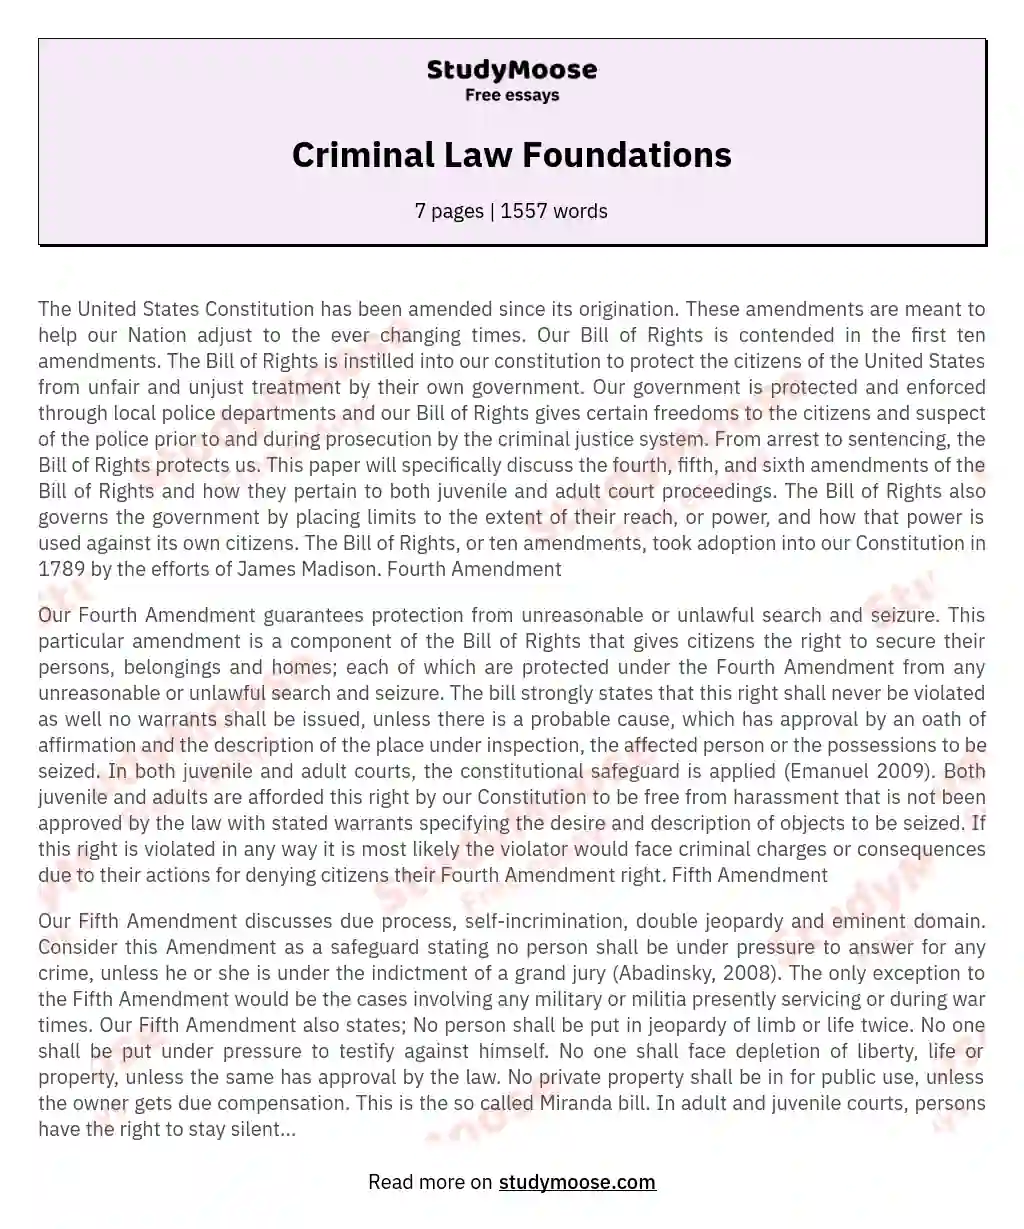 Criminal Law Foundations essay